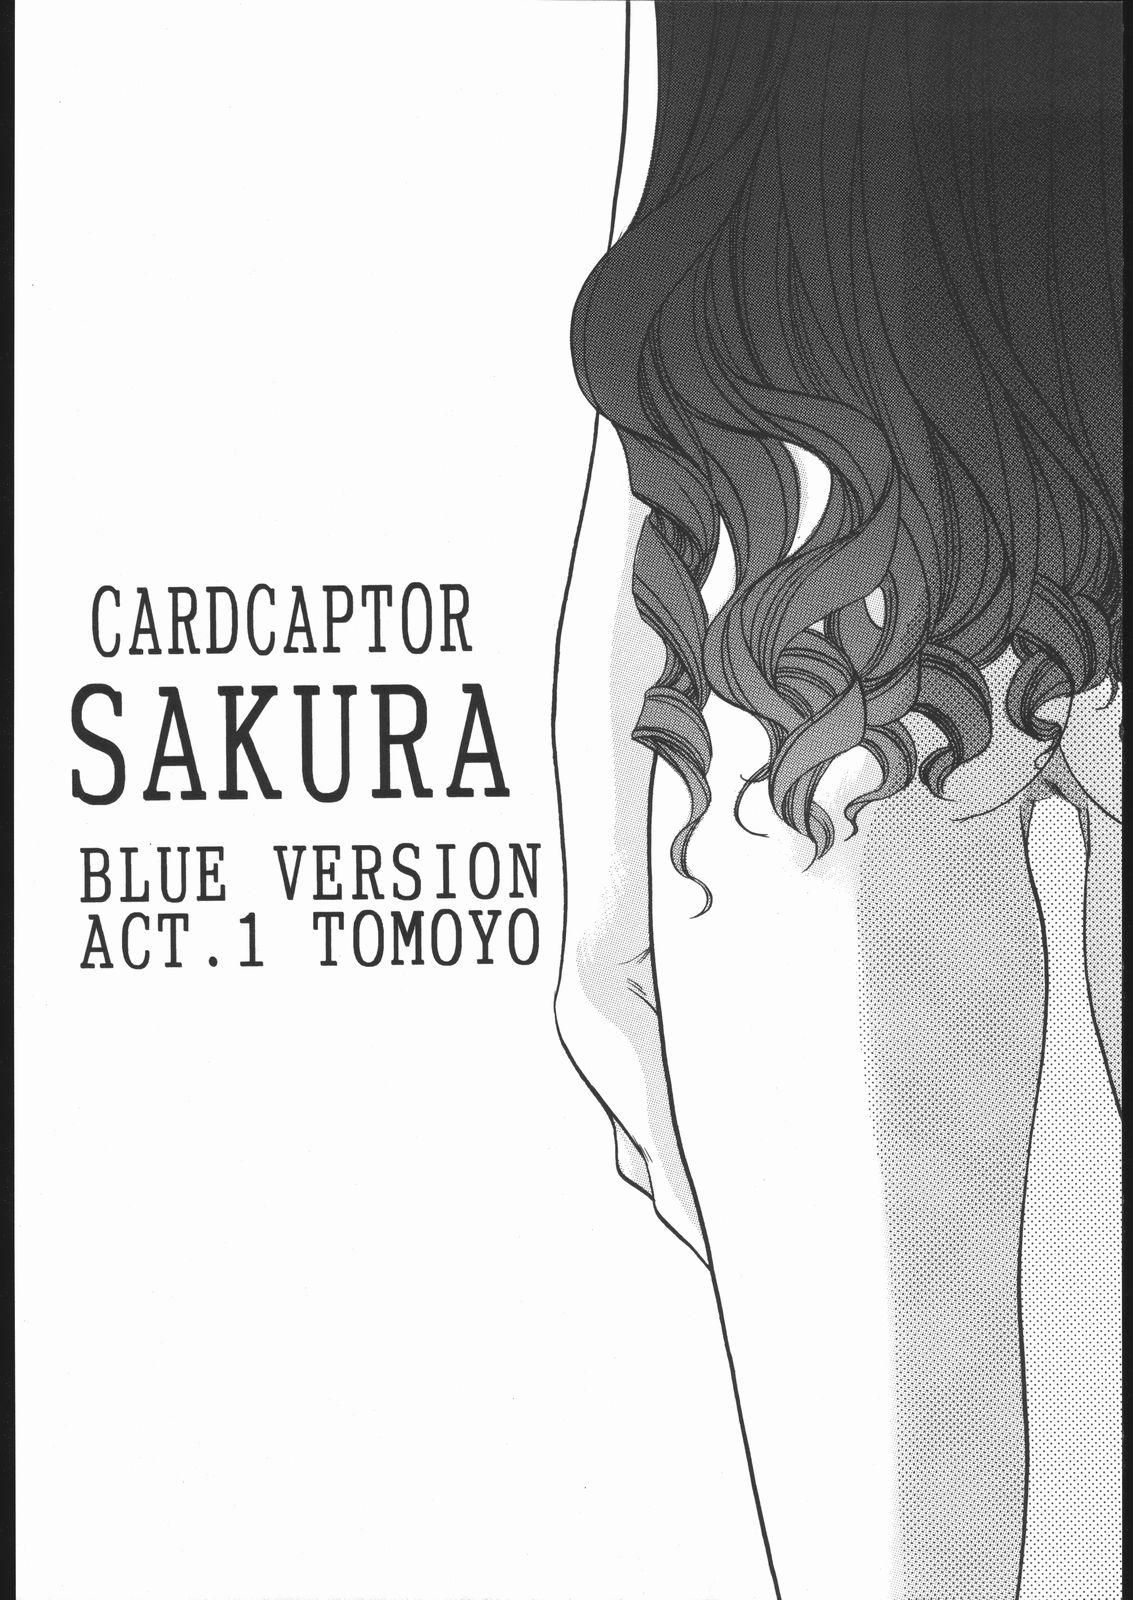 Pay Card Captor Sakura Blue Version - Cardcaptor sakura Van - Page 5